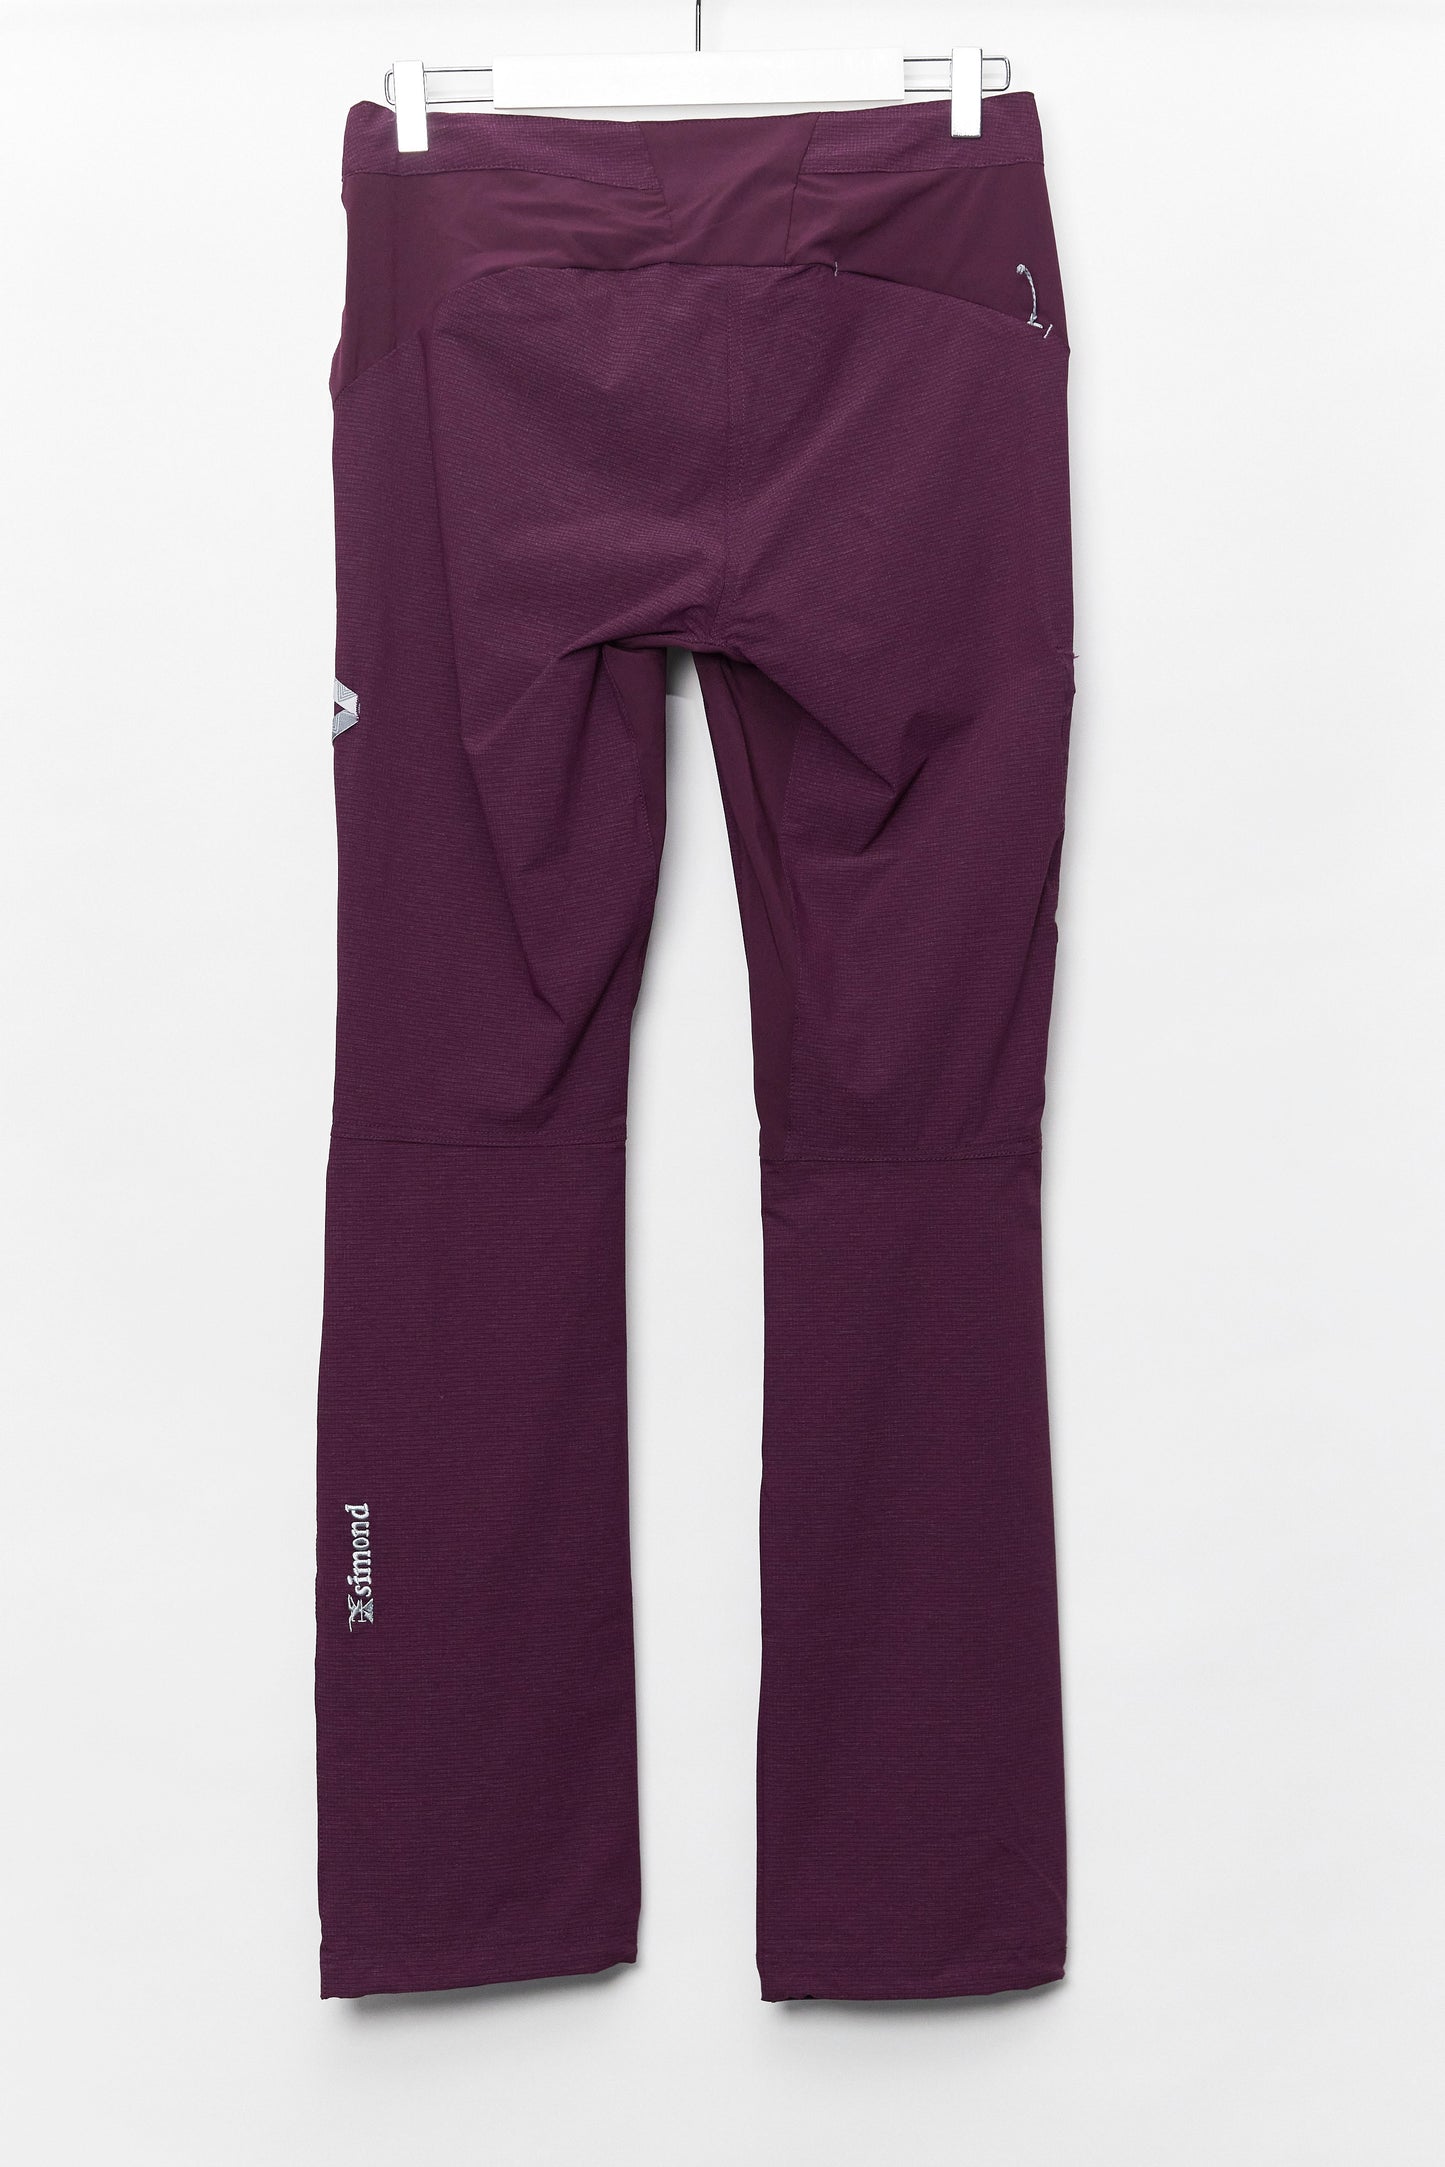 Womens Purple Sport Hiking trousers size Medium